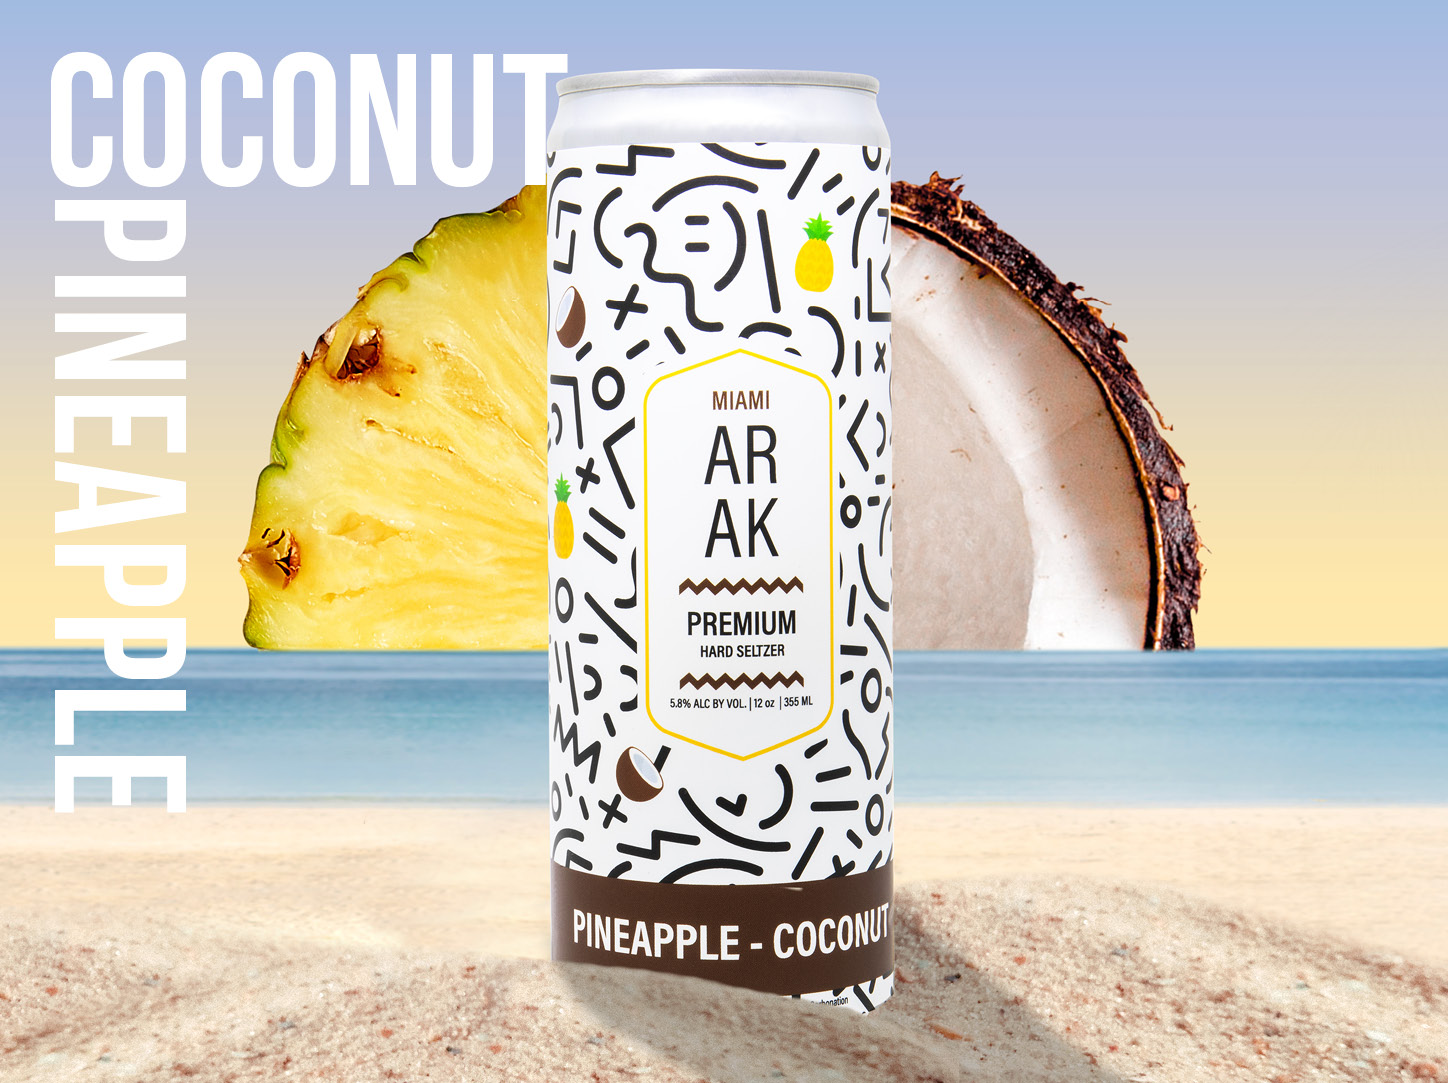 Miami Arak Pineapple Coconut flavor can